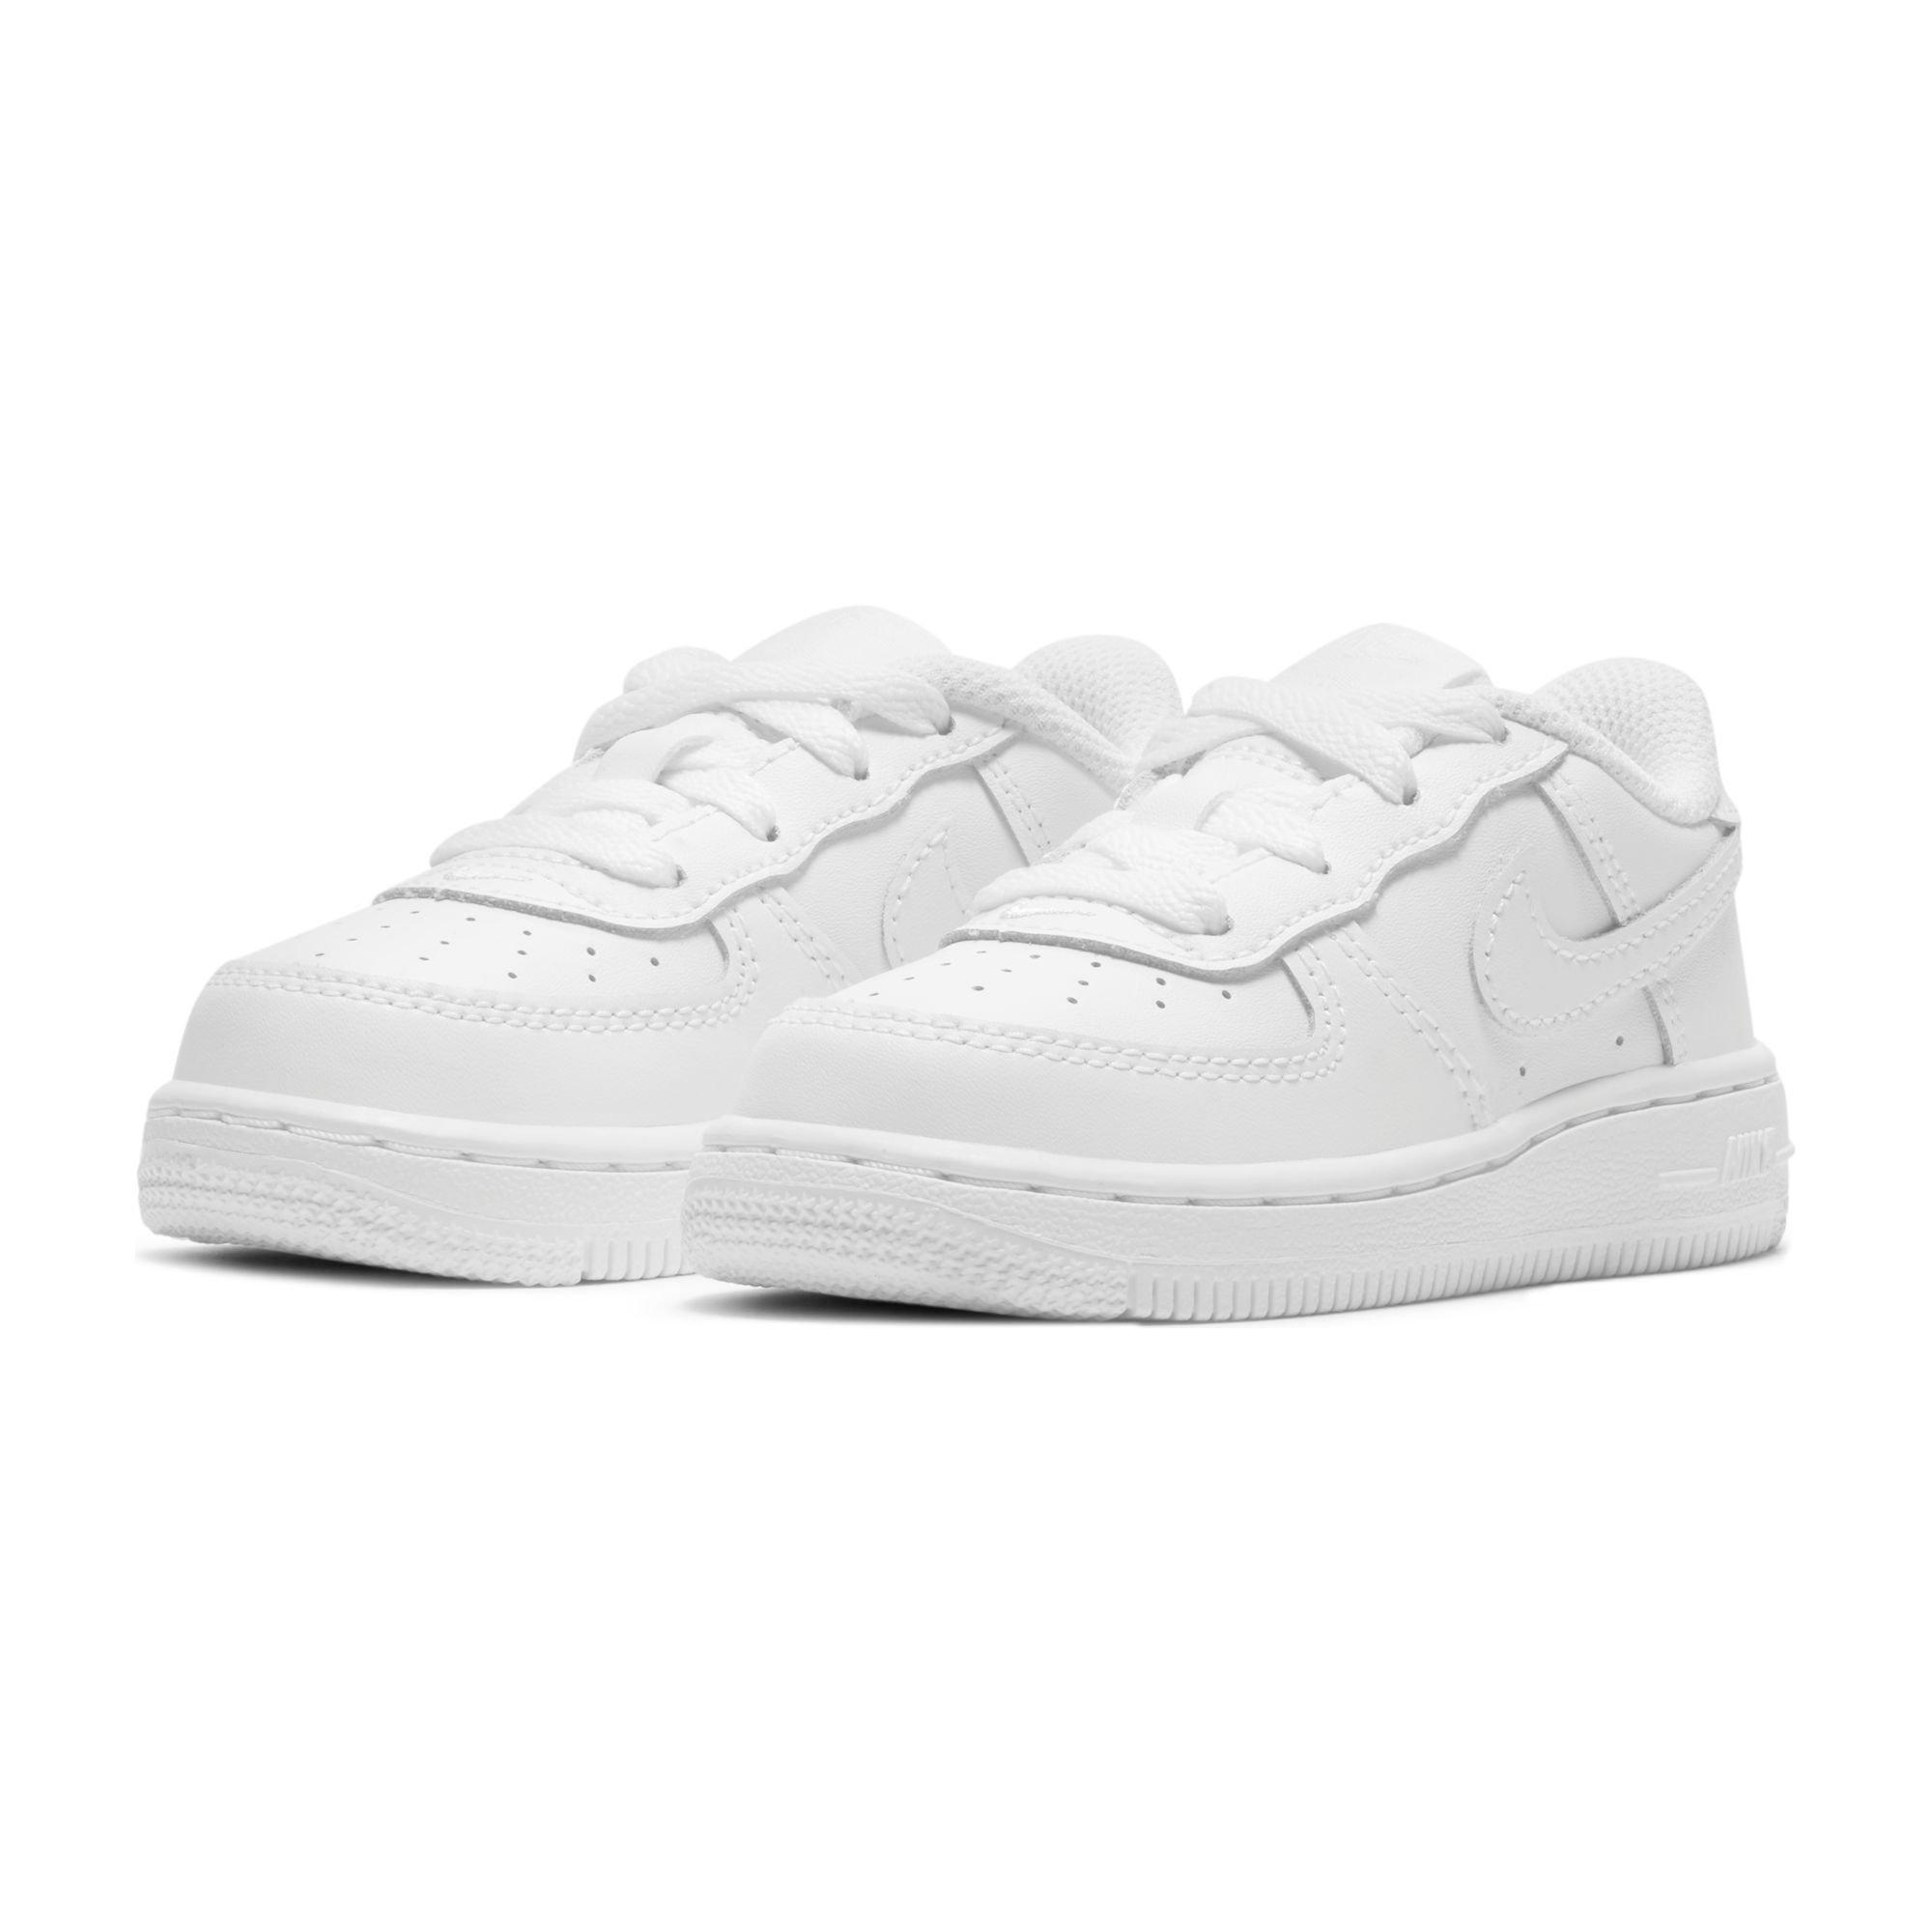 Nike Force 1 LV8 1 Pearl White/Ale Brown/Sesame/White Toddler Boys' Shoe  - Hibbett